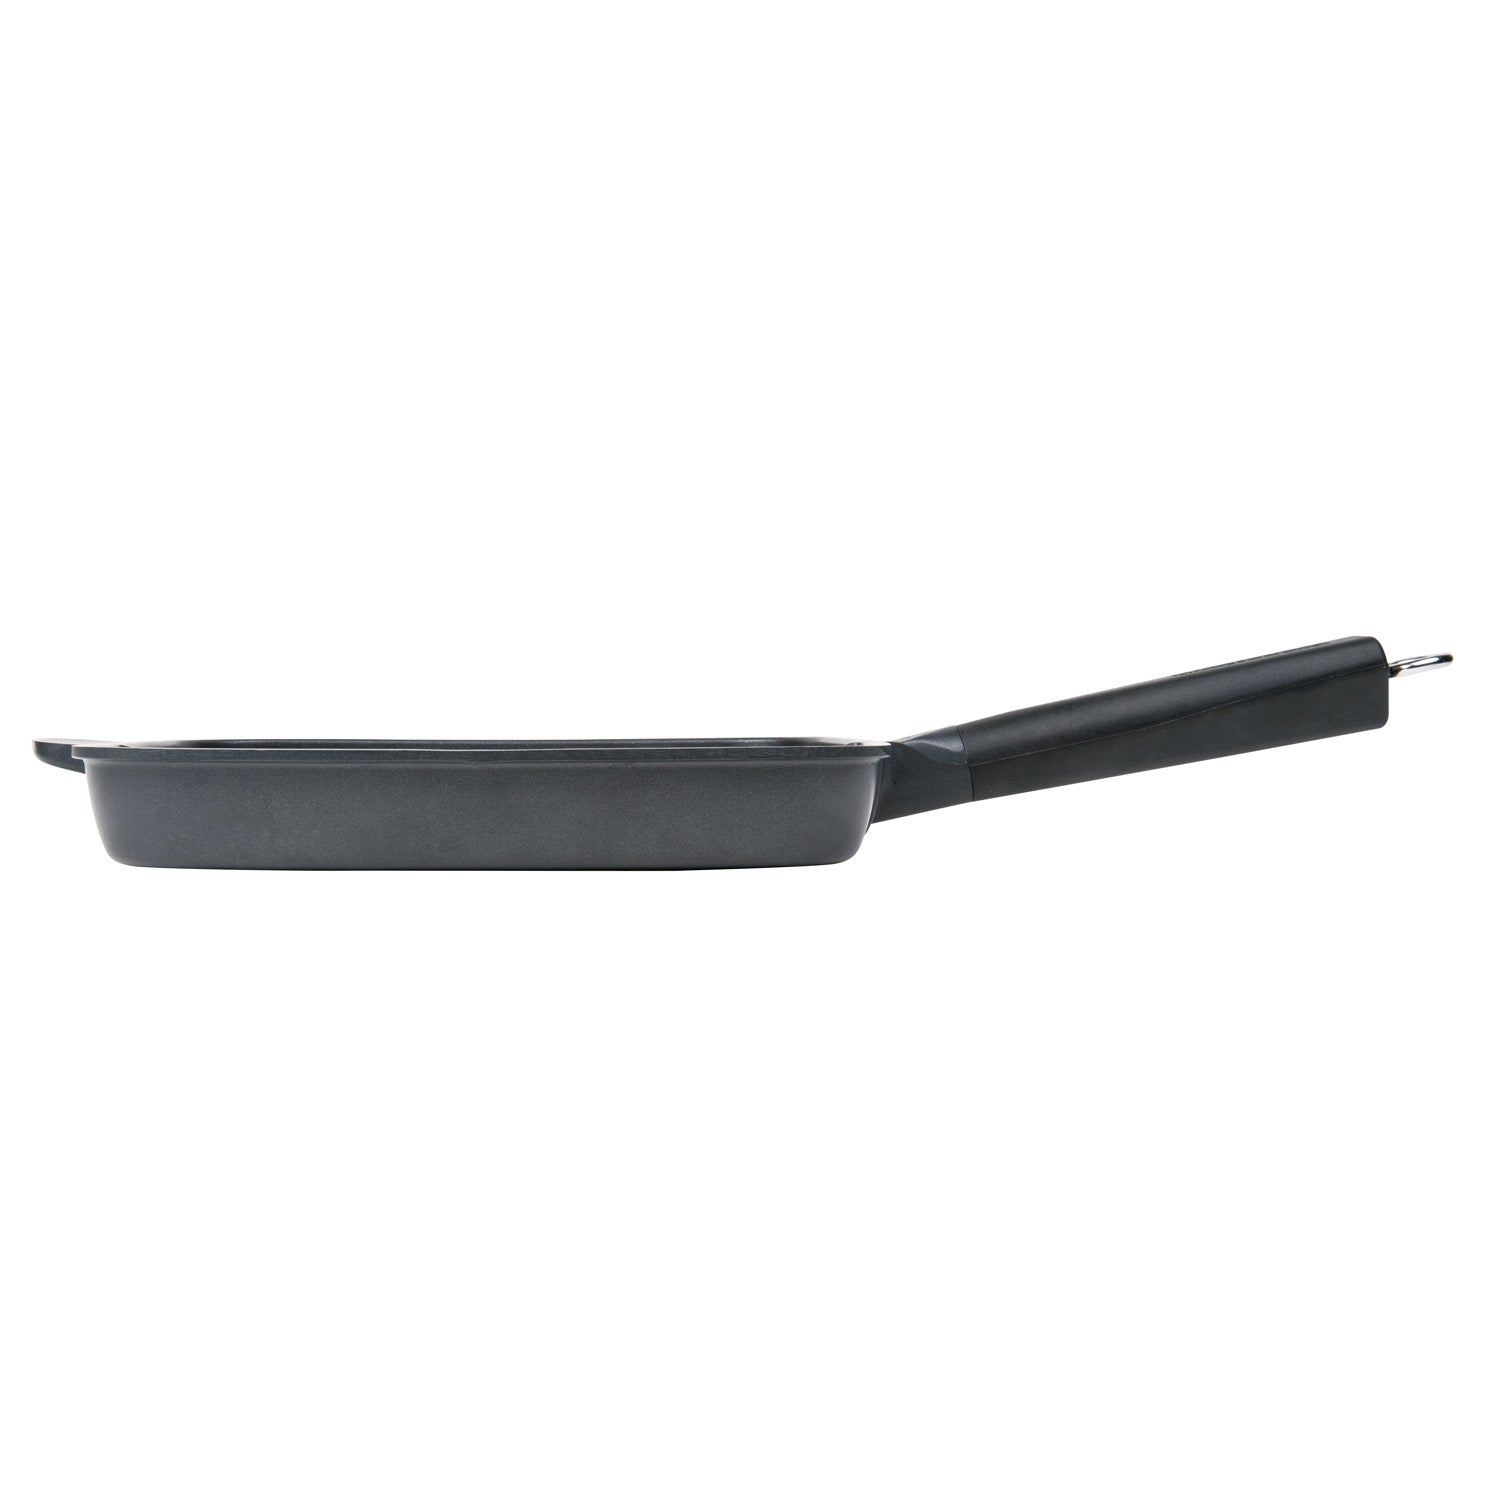 MasterPan Non-Stick Cast Aluminium 2-Section Meal Skillet 11 Black